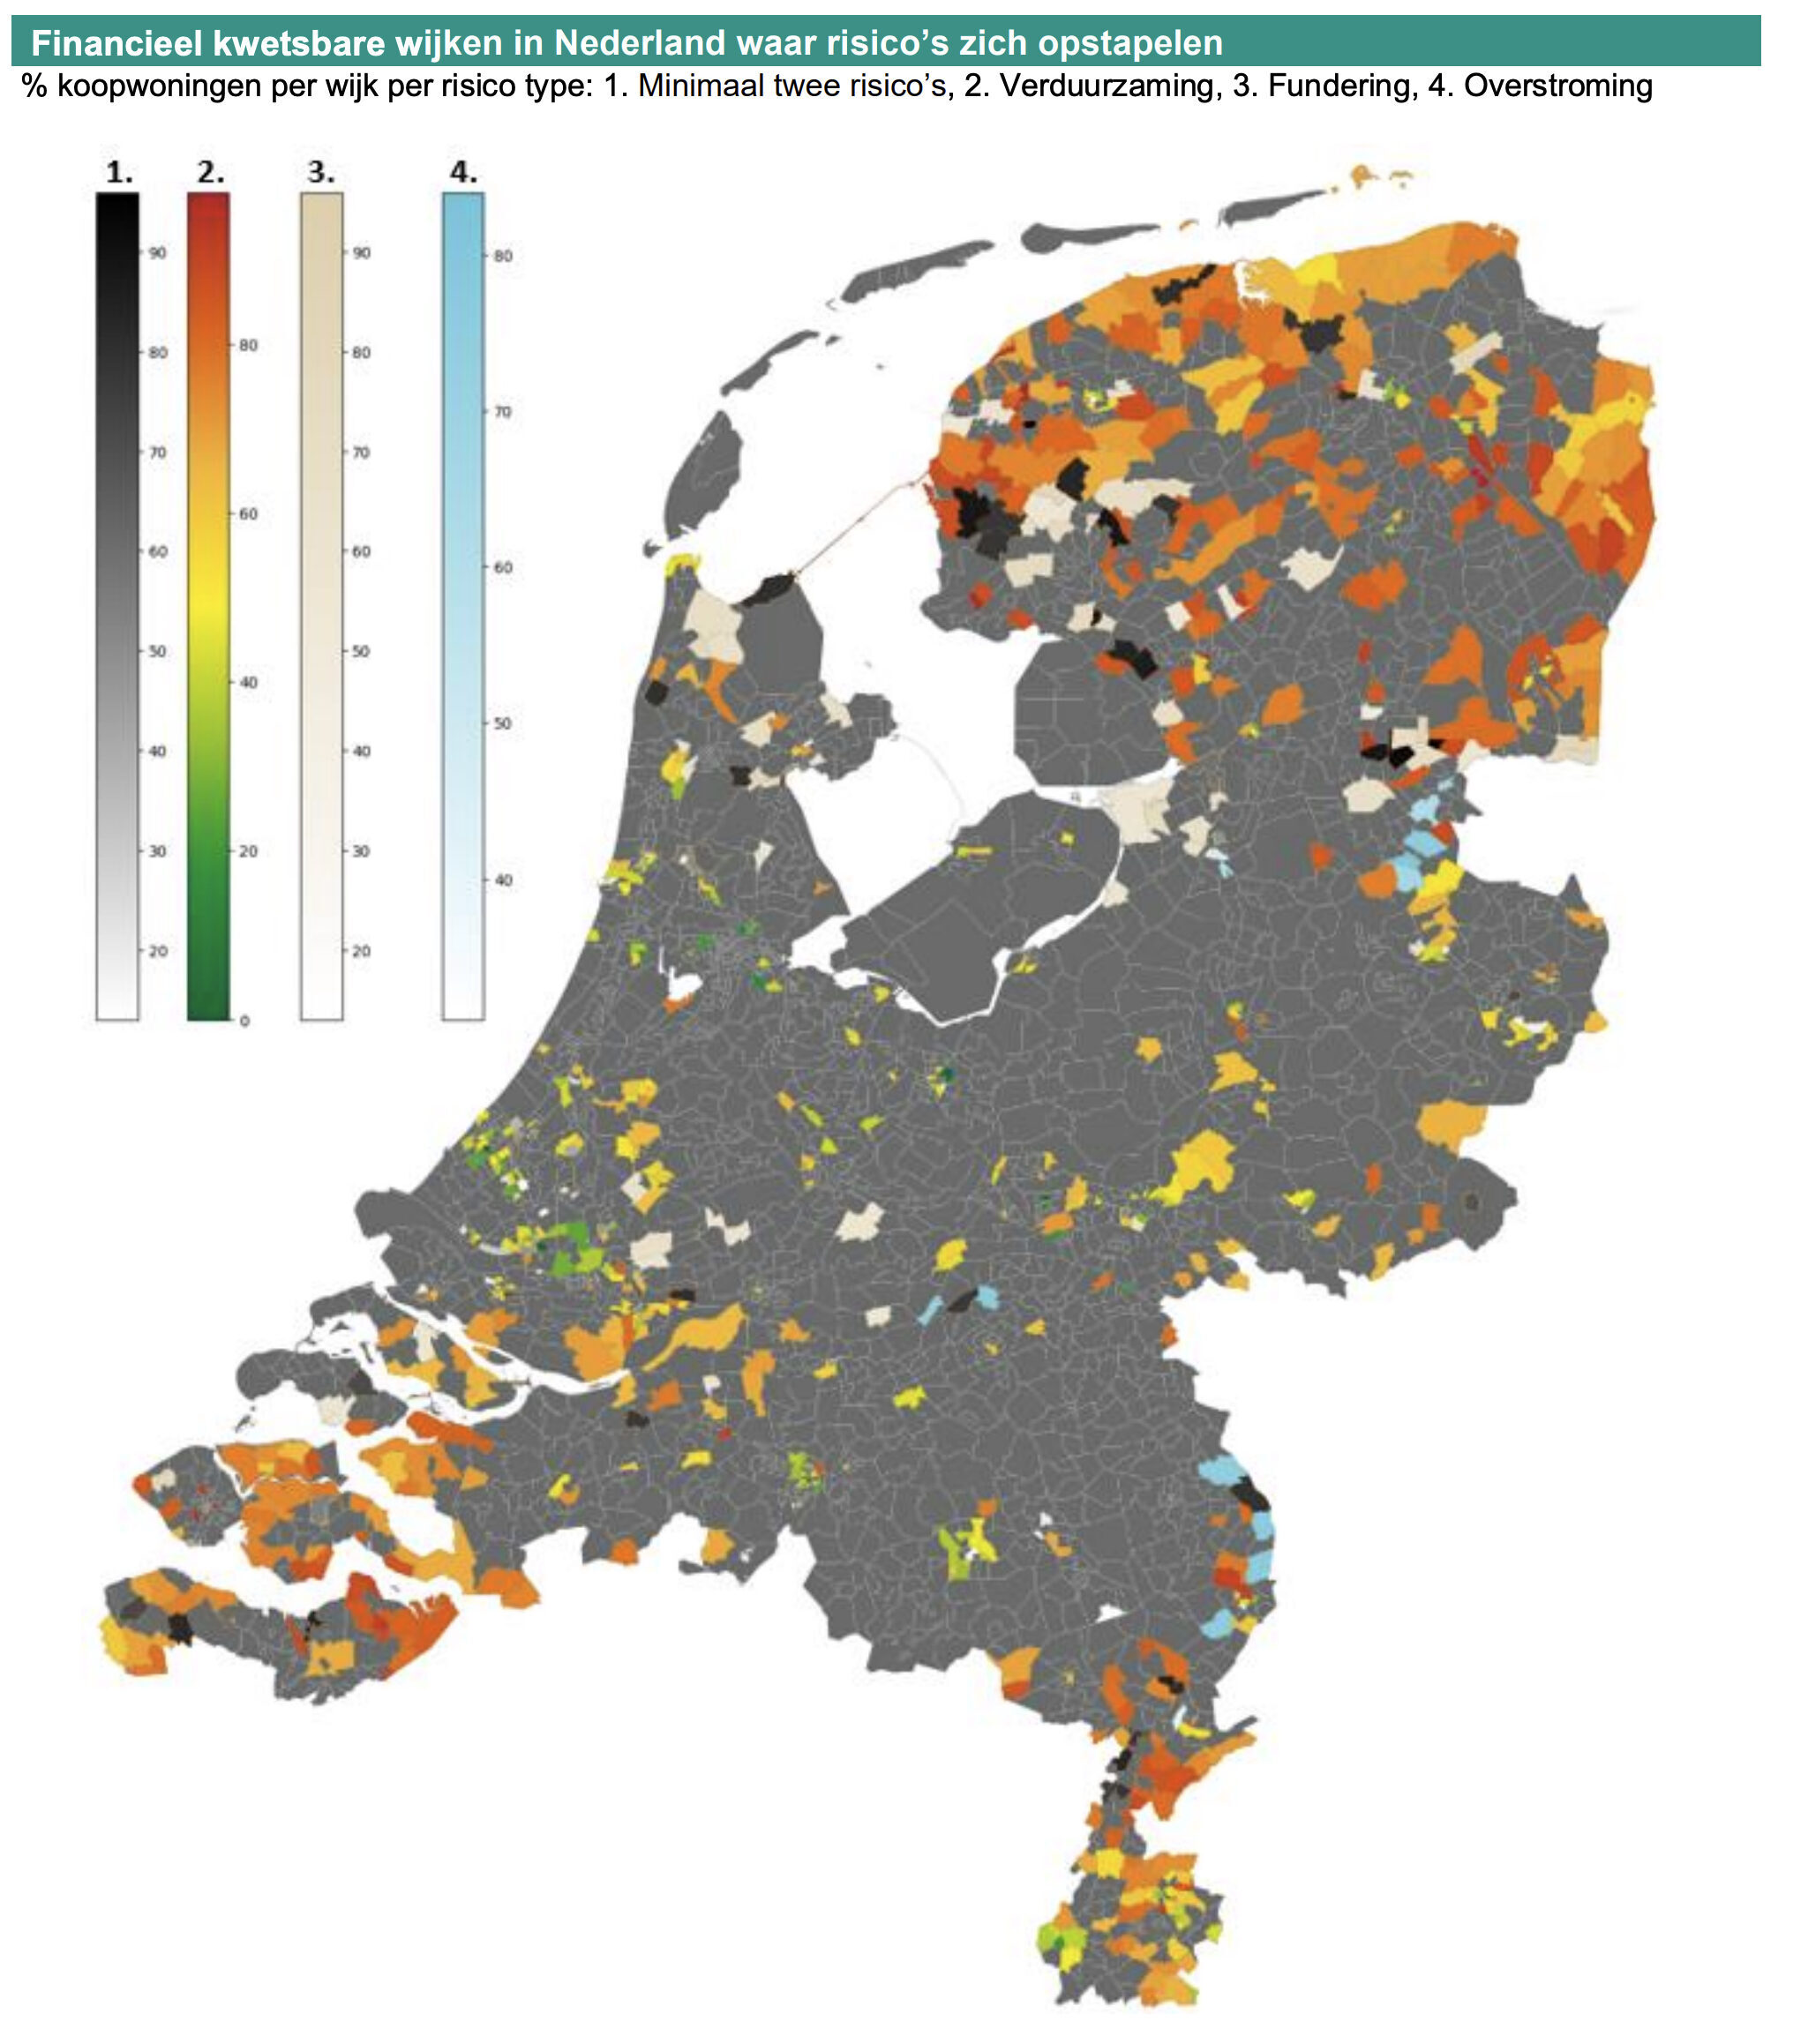 De klimaatkwetsbare wijken in Nederland. Bron: ABN AMRO 